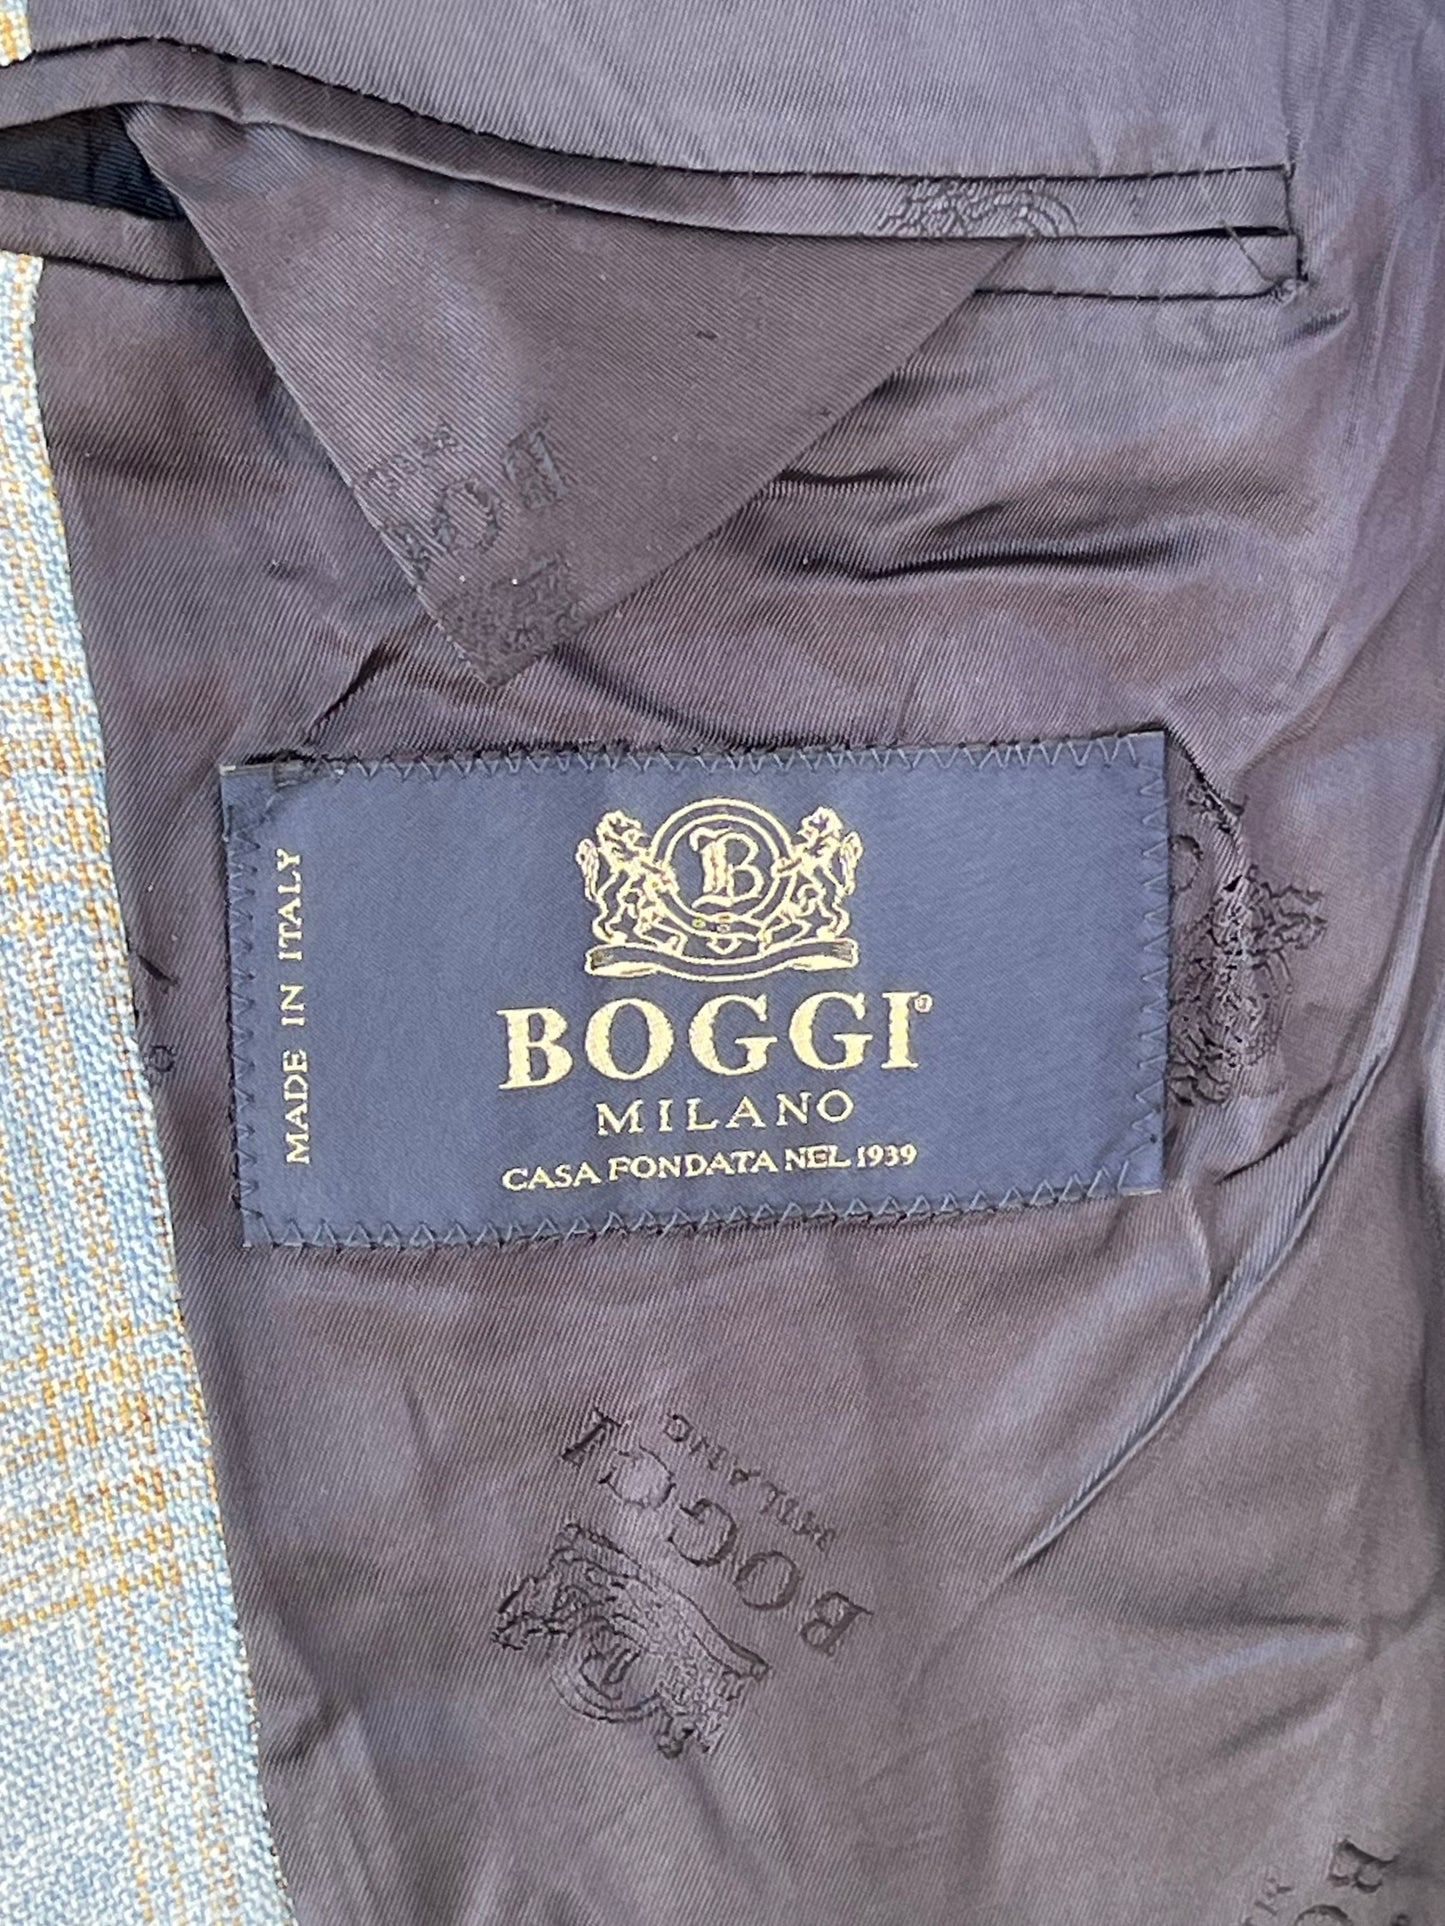 Giacca Boggi anni '90 in seta lino lana tg. 50